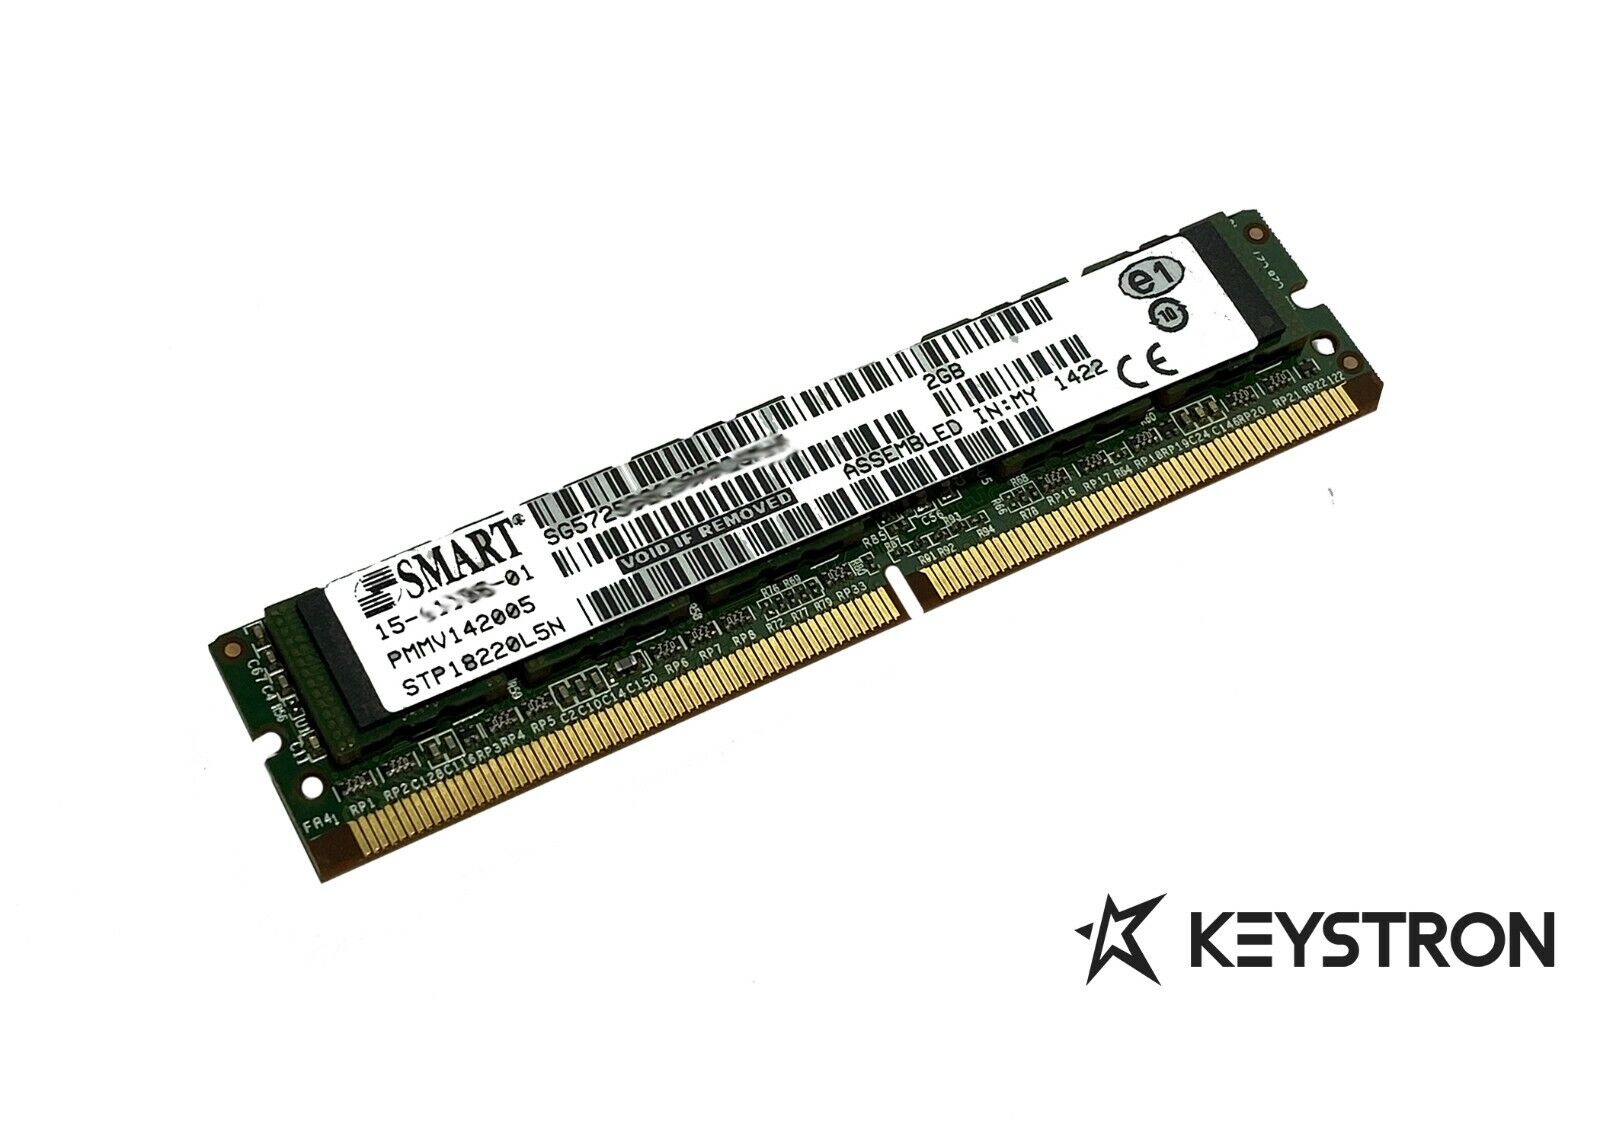 MEM-SUP2T-2GB Upgrade 2GB to 4GB Cisco Approved Dram Memory for SUP ENGINE 2T 2